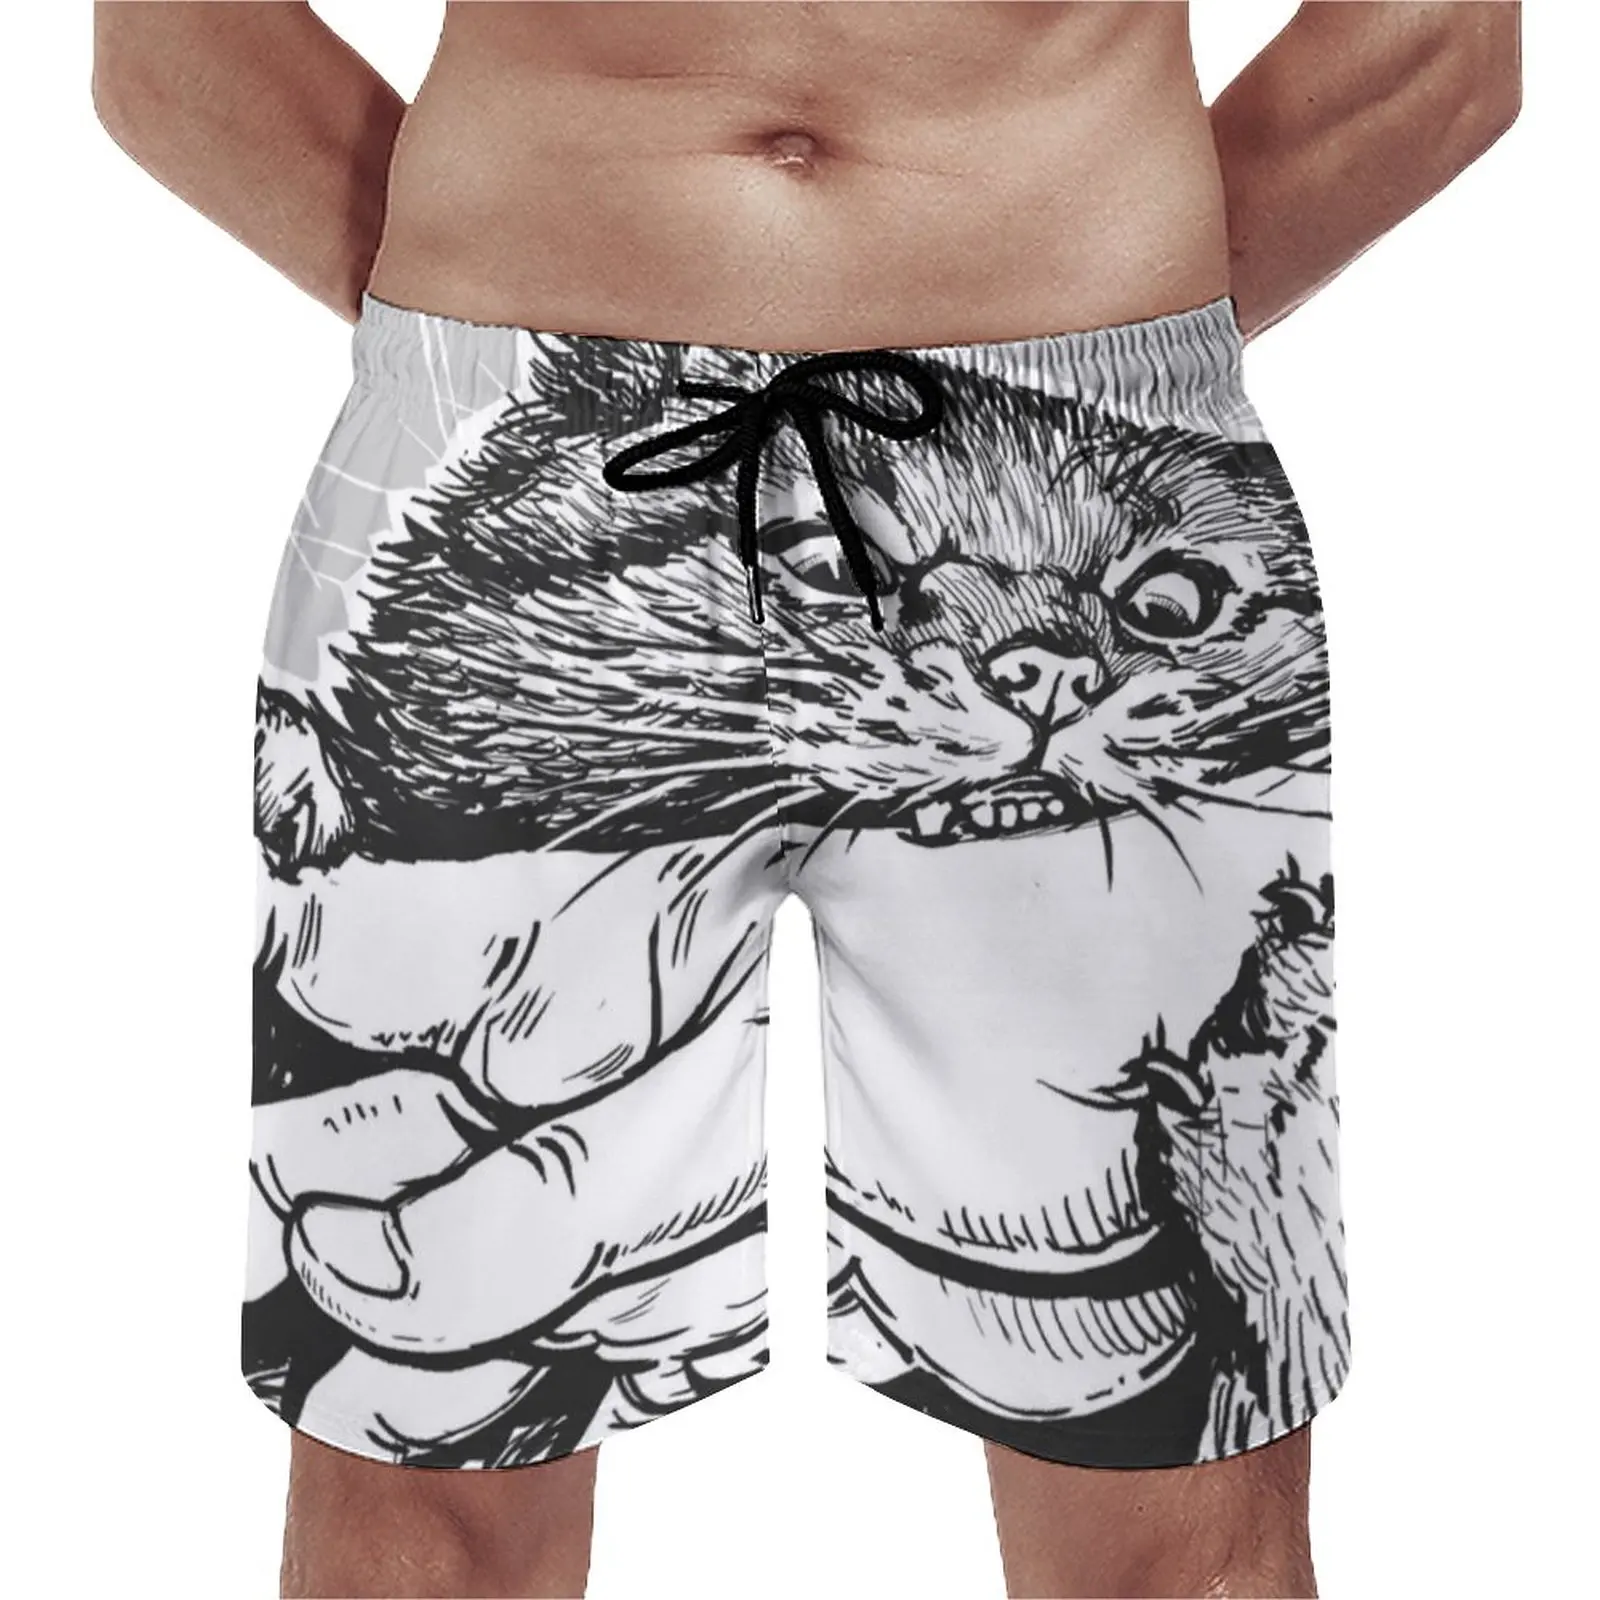 

Mega Bite Crazy Cat Board Shorts Hot Black White Printed Beach Shorts Males Drawstring Funny Swimming Trunks Big Size